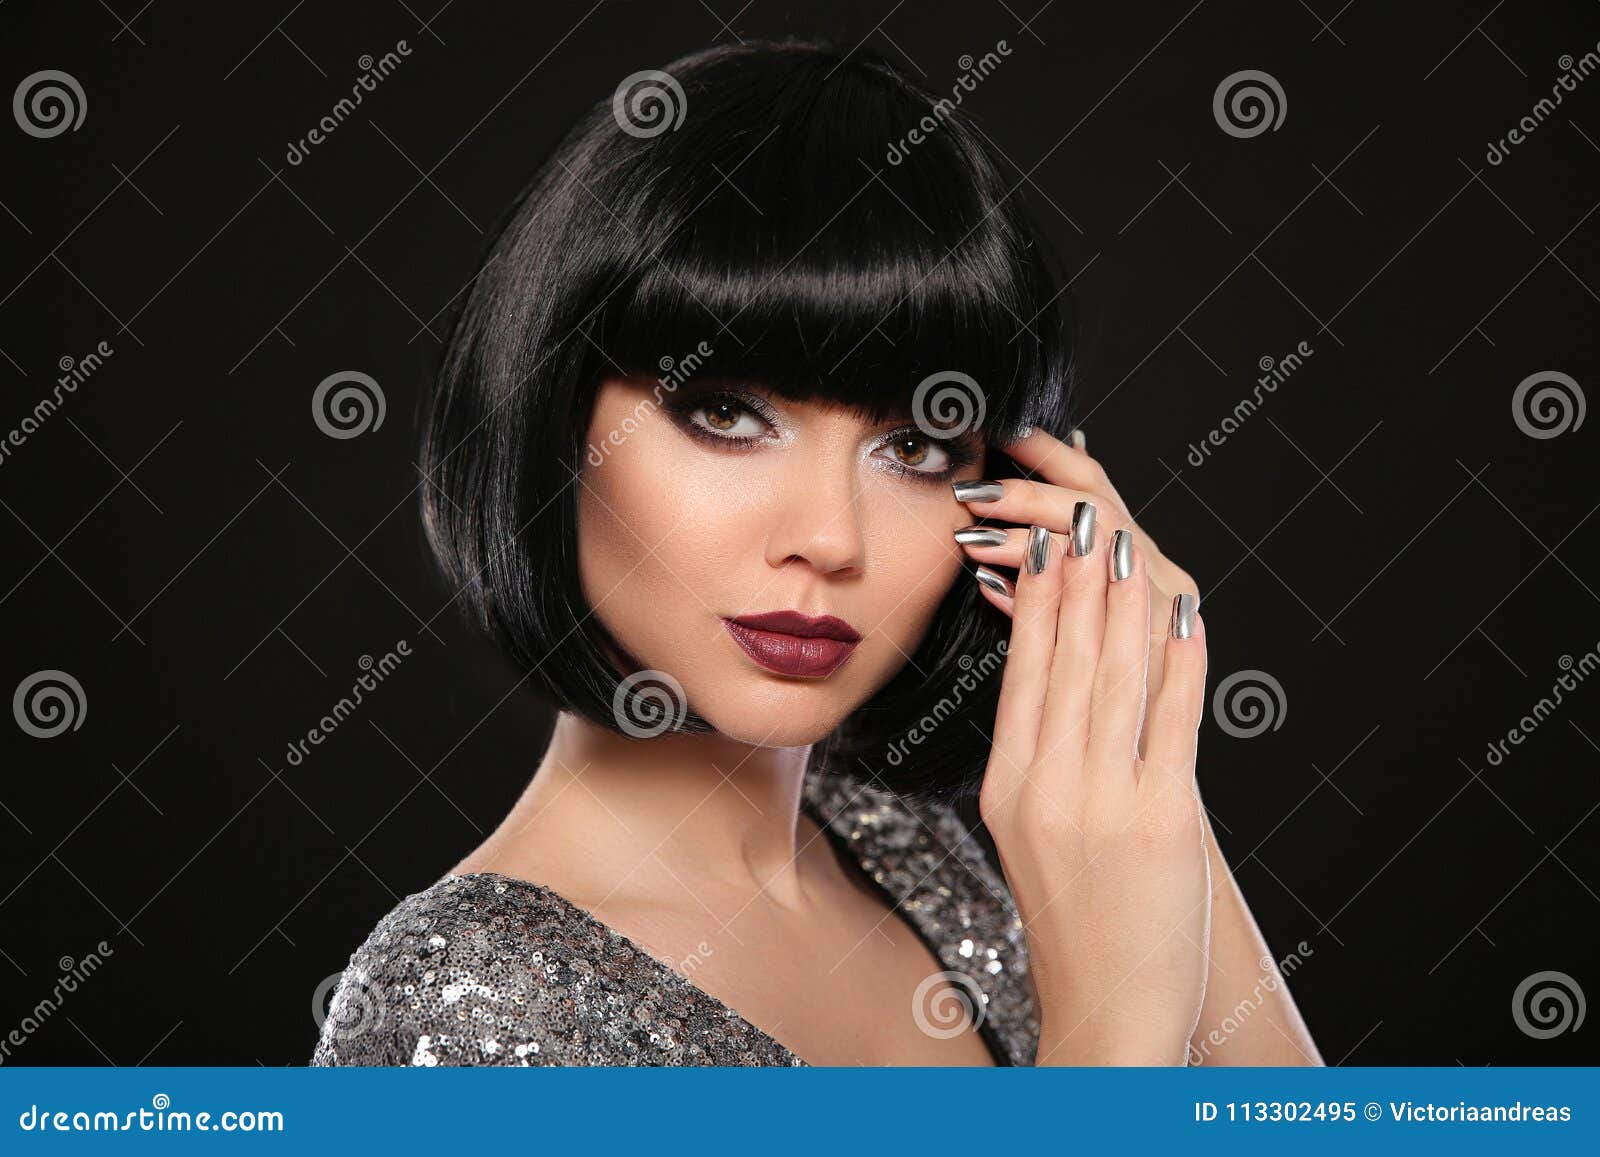 Beauty Makeup Silver Manicured Polish Nails Bob Hairstyle Fashion